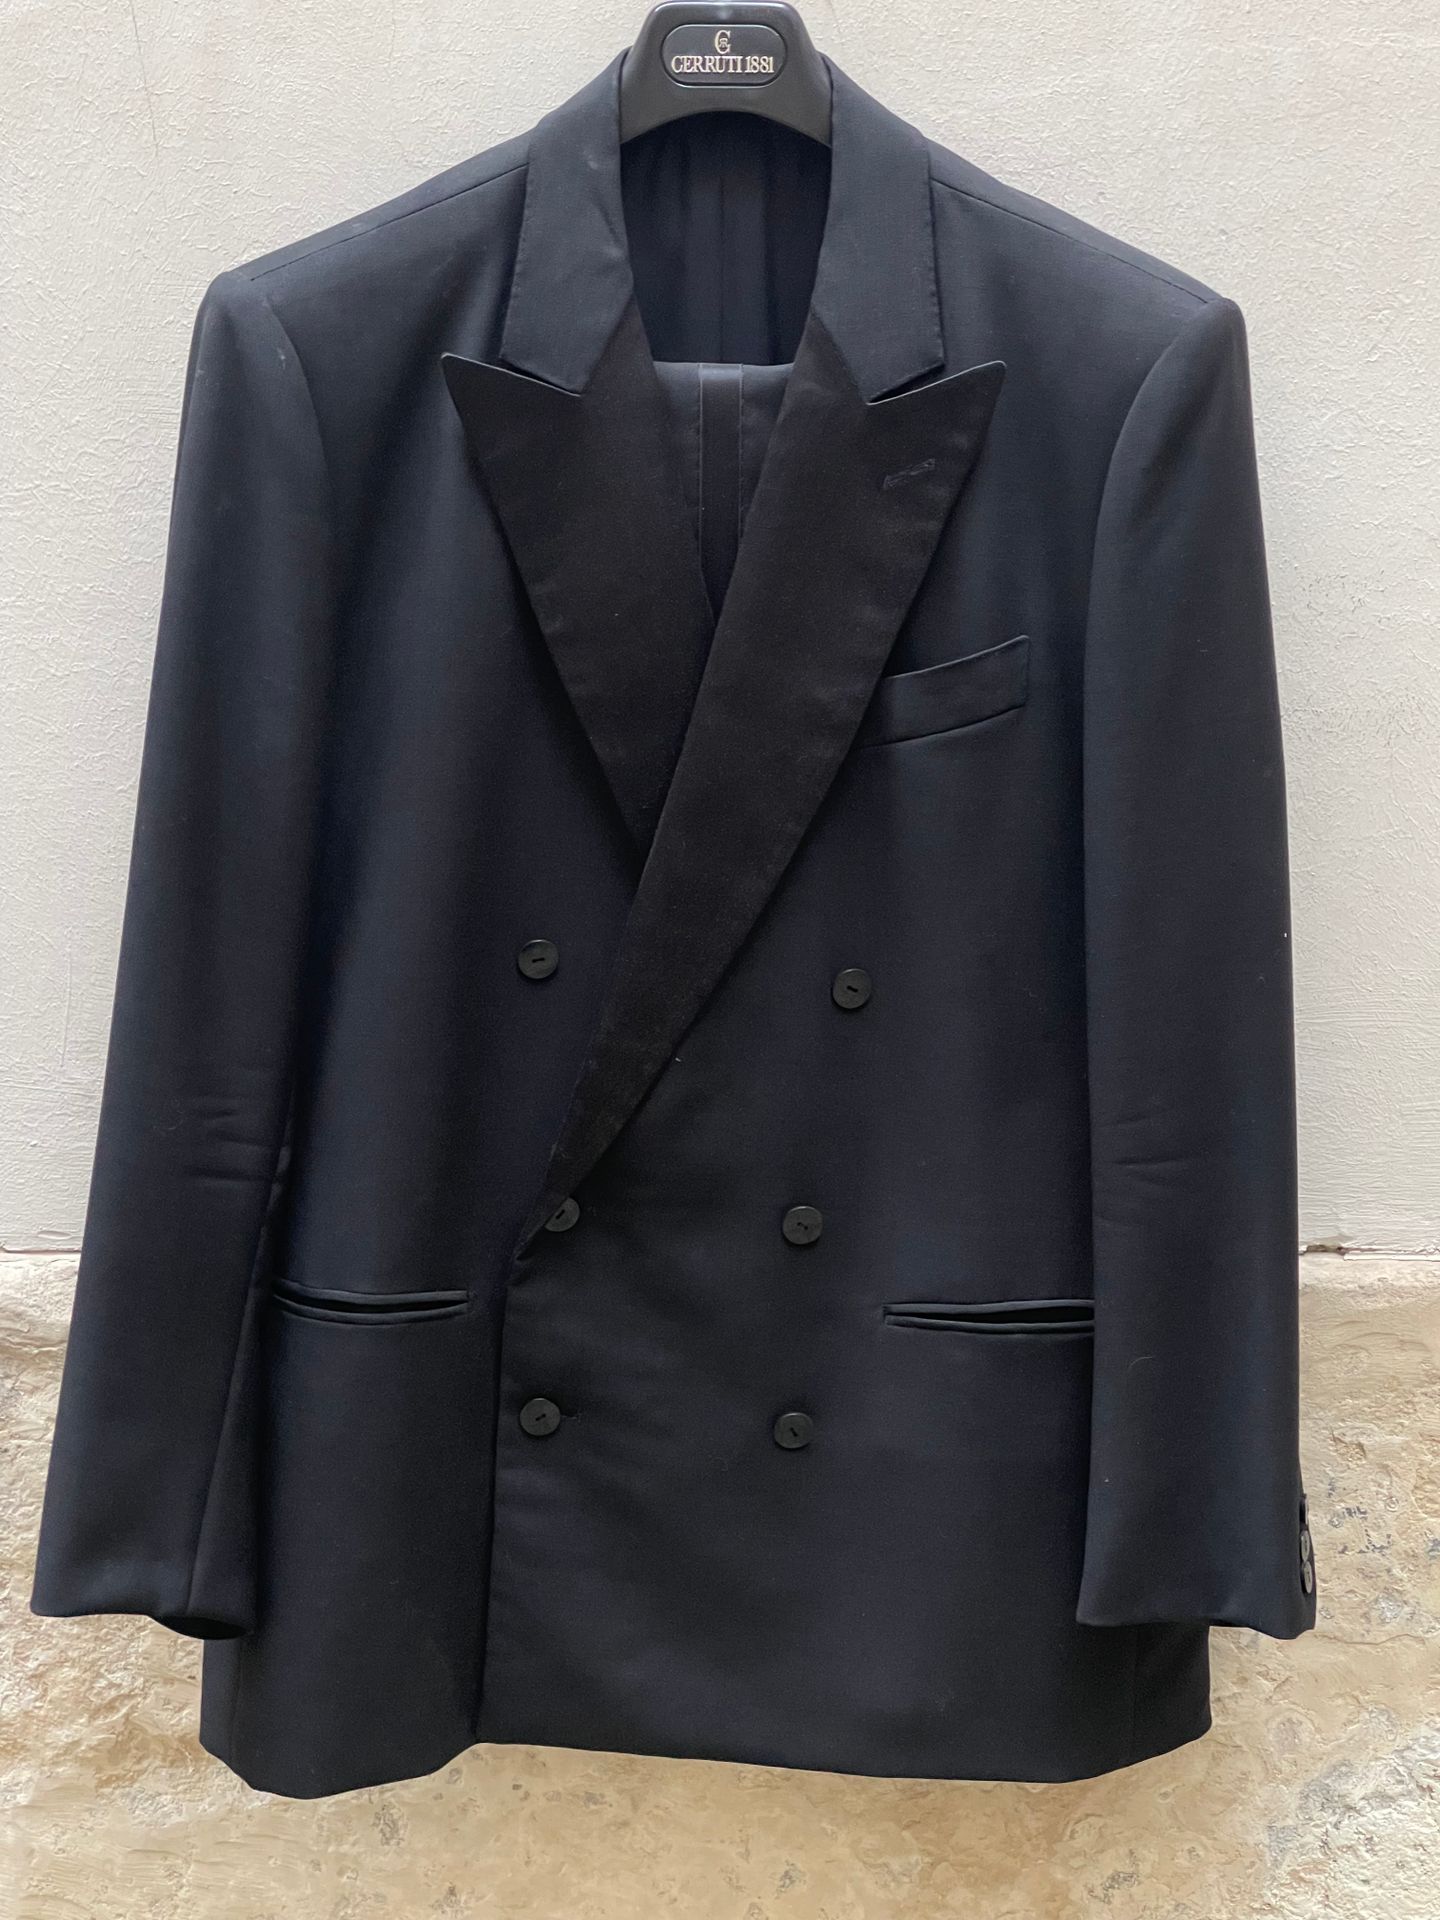 Null PACO RABANNE. Black tuxedo with satin trim. Good condition.